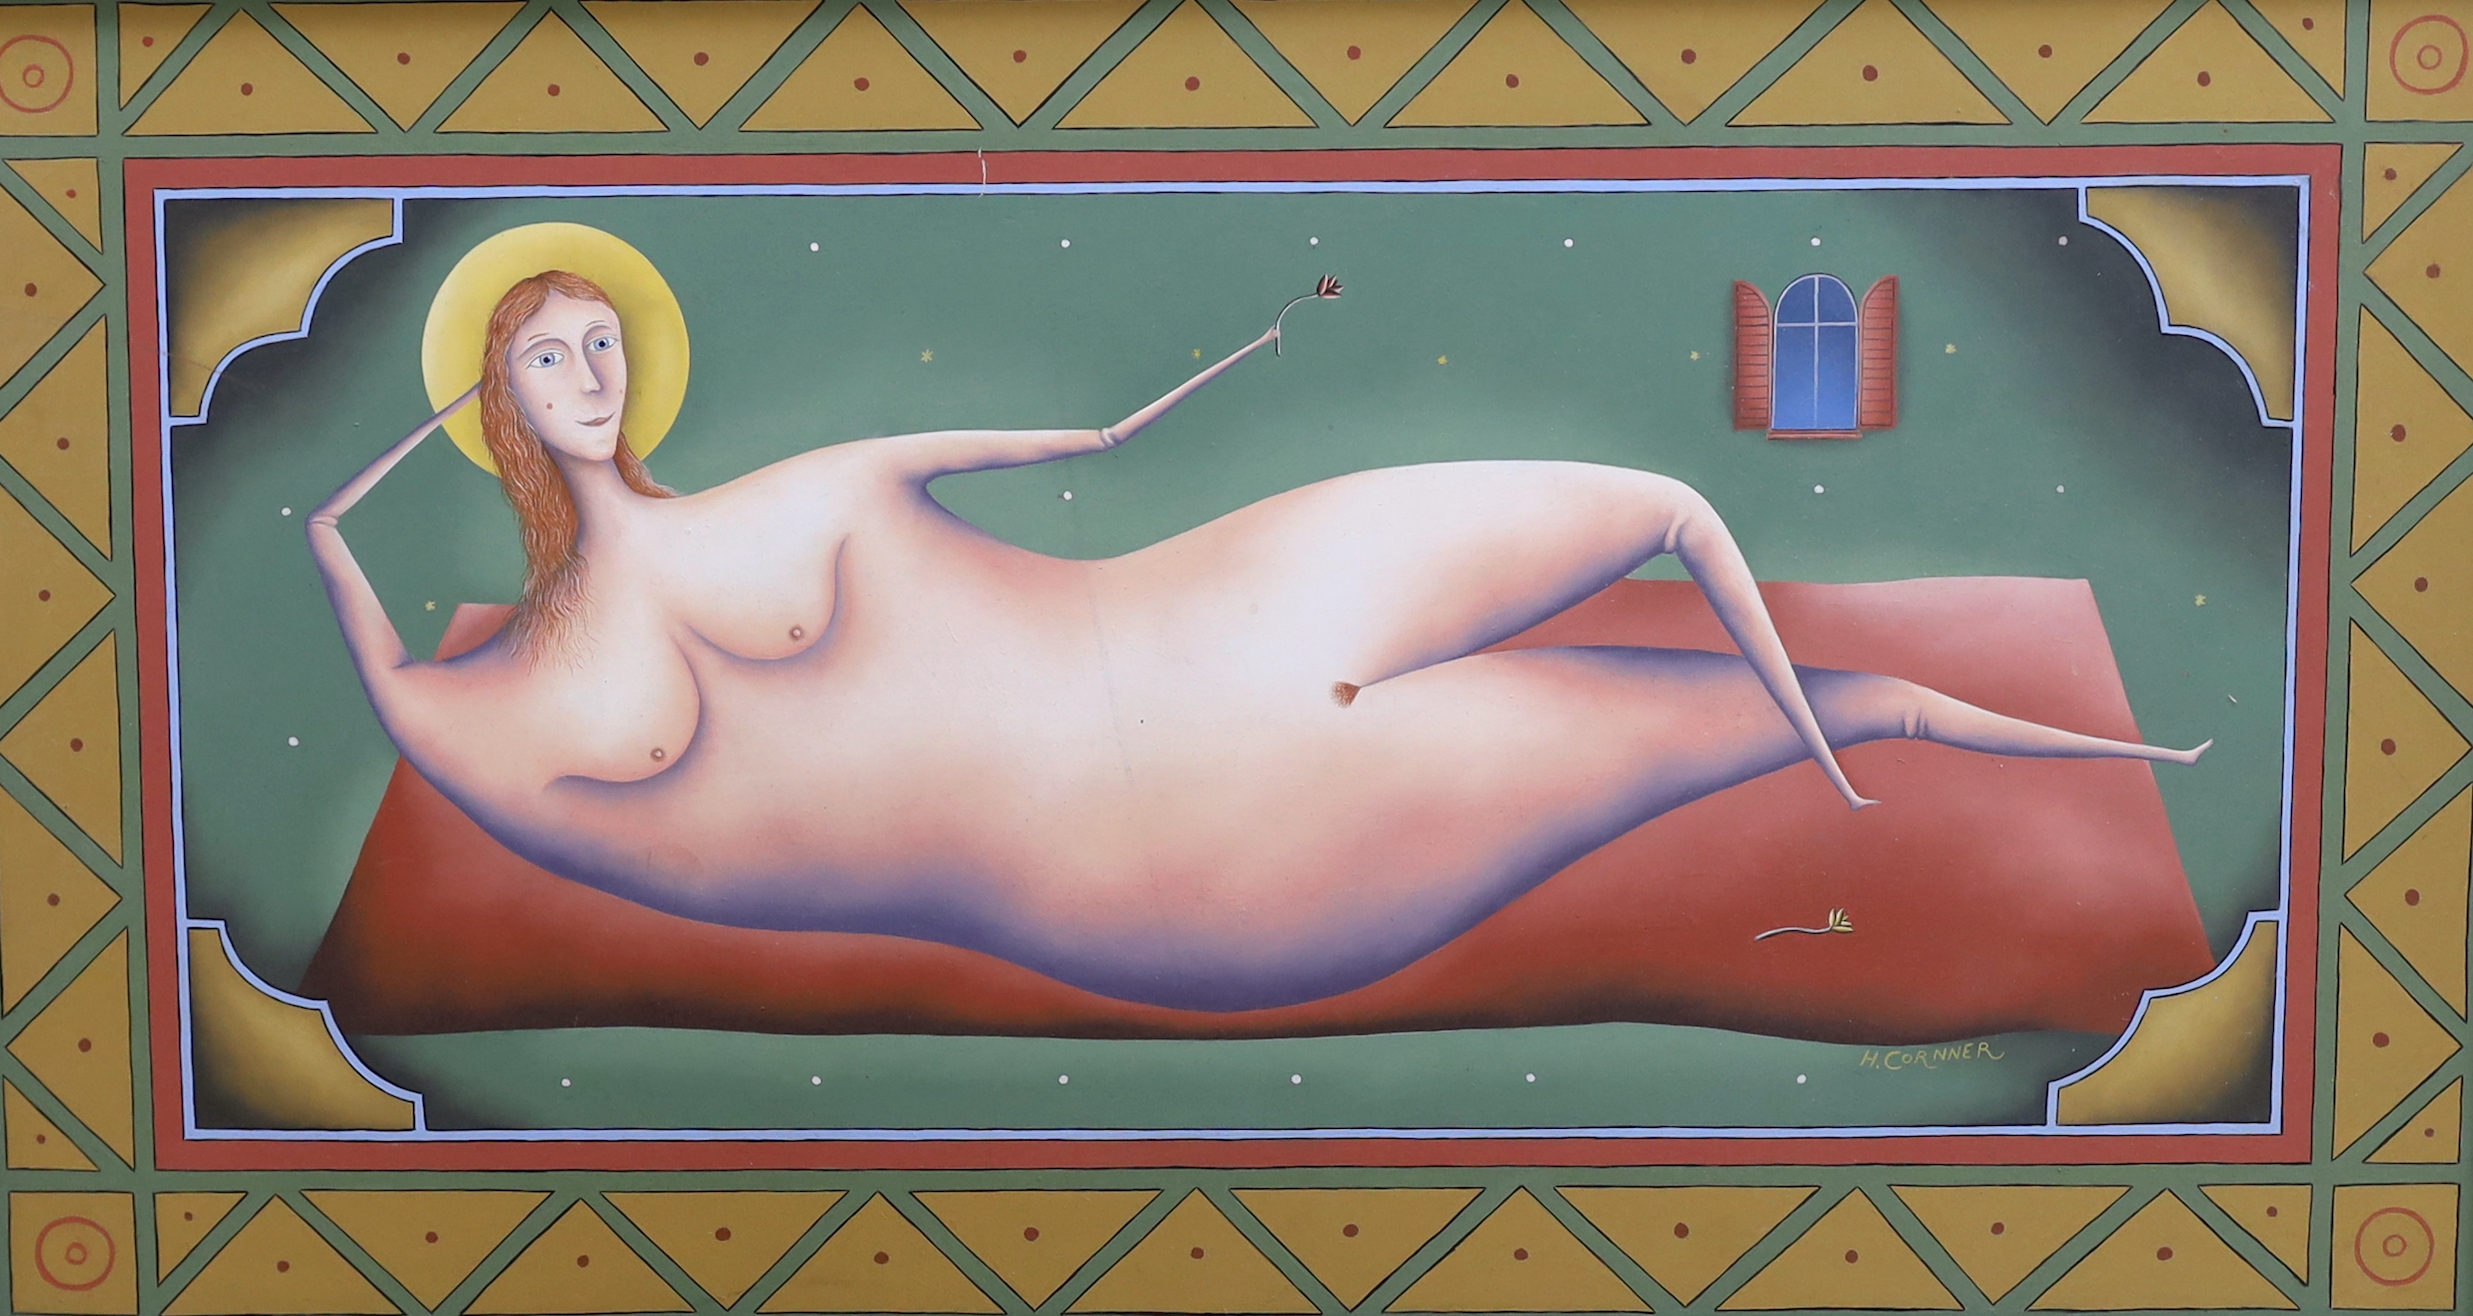 Reclining nude lady with geometric border by Hadyn Cornner